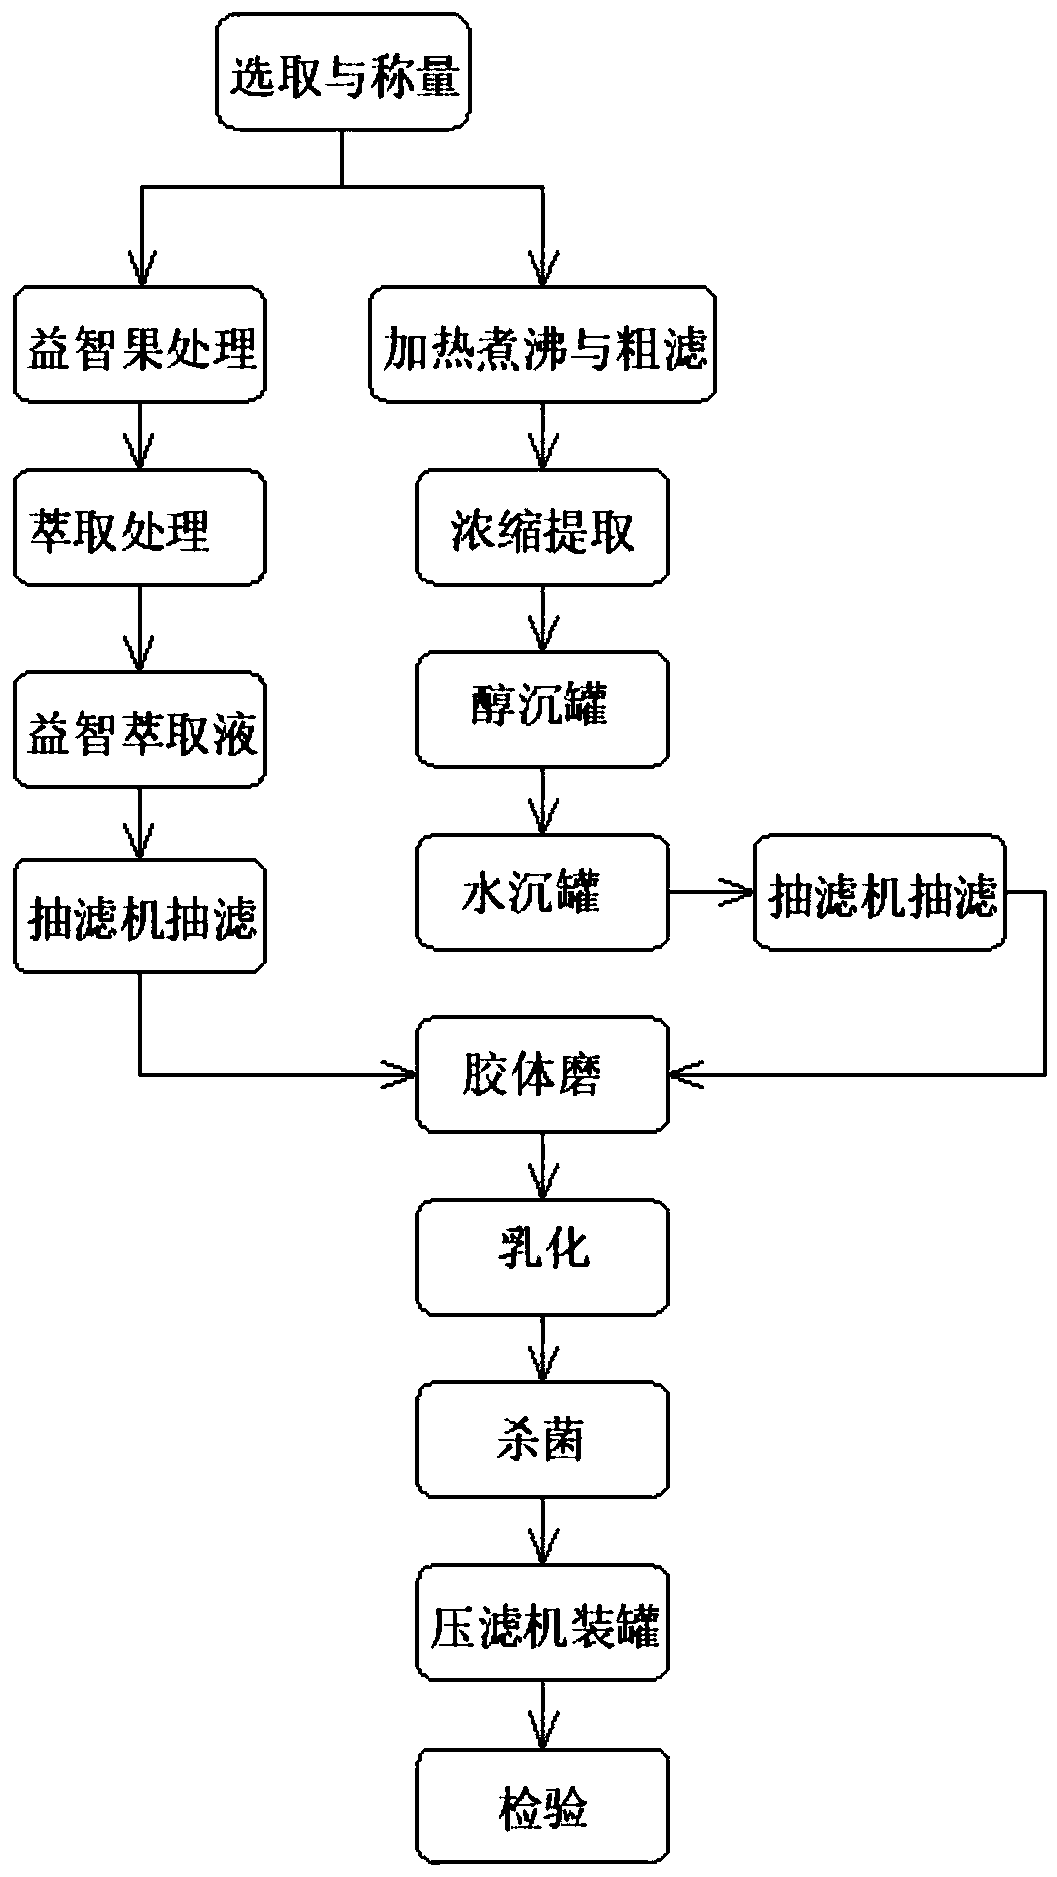 Preparation method of Alpinia oxyphylla vinegar